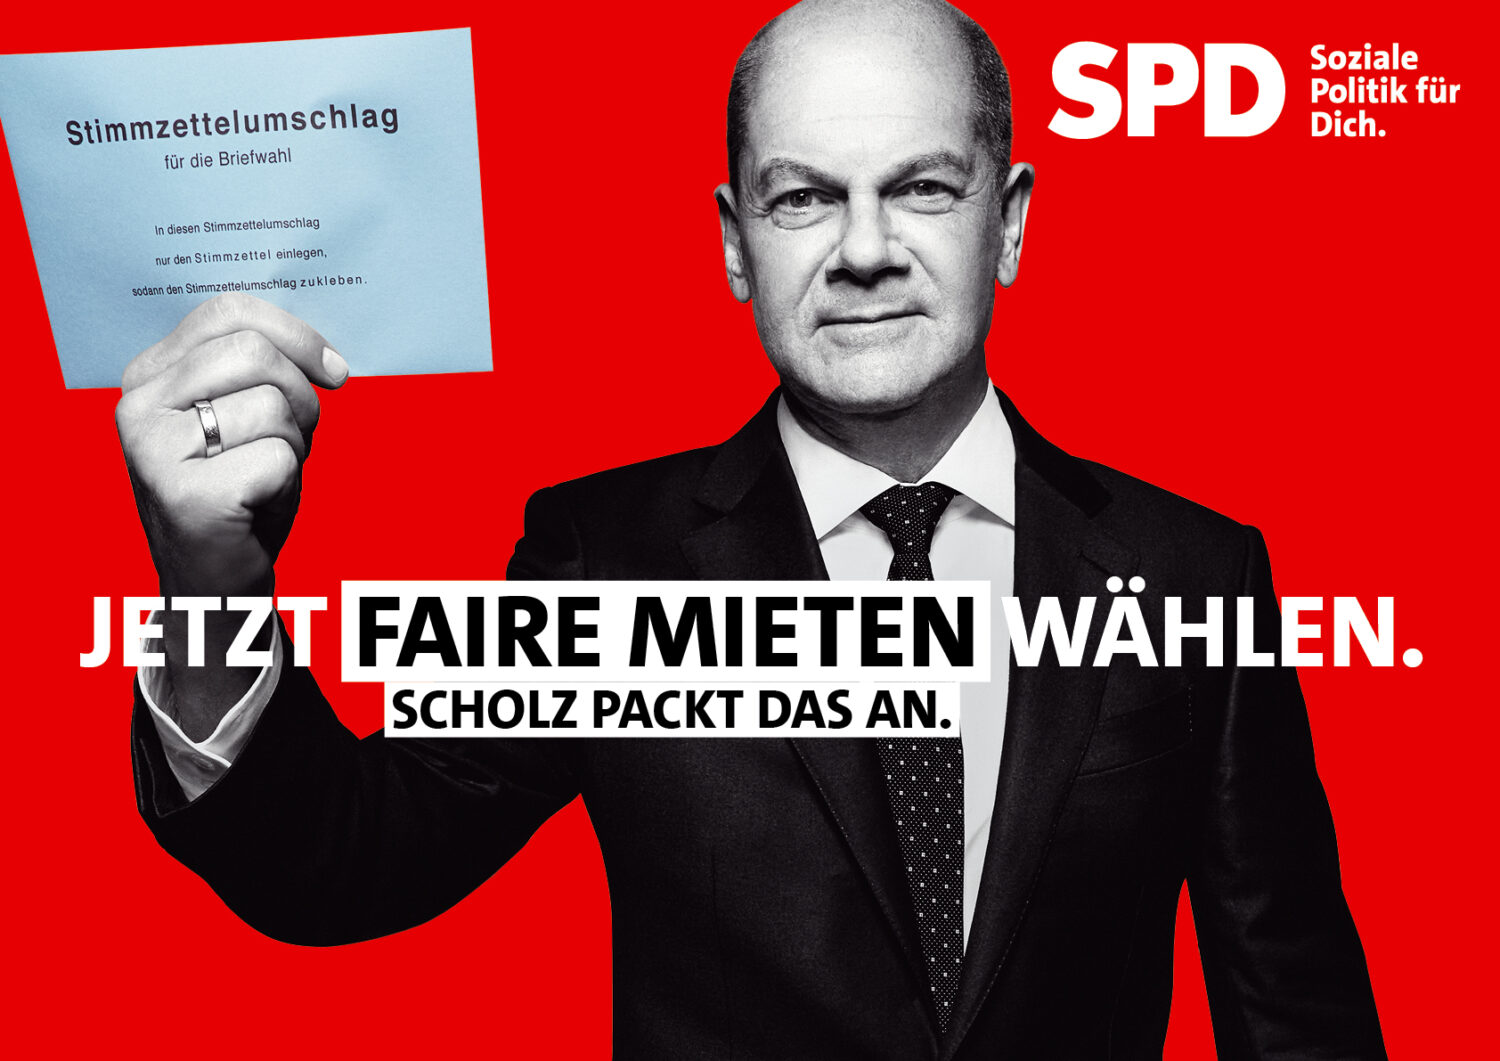 SPD Plakat Bundestagswahl 2021 – Faire Mieten